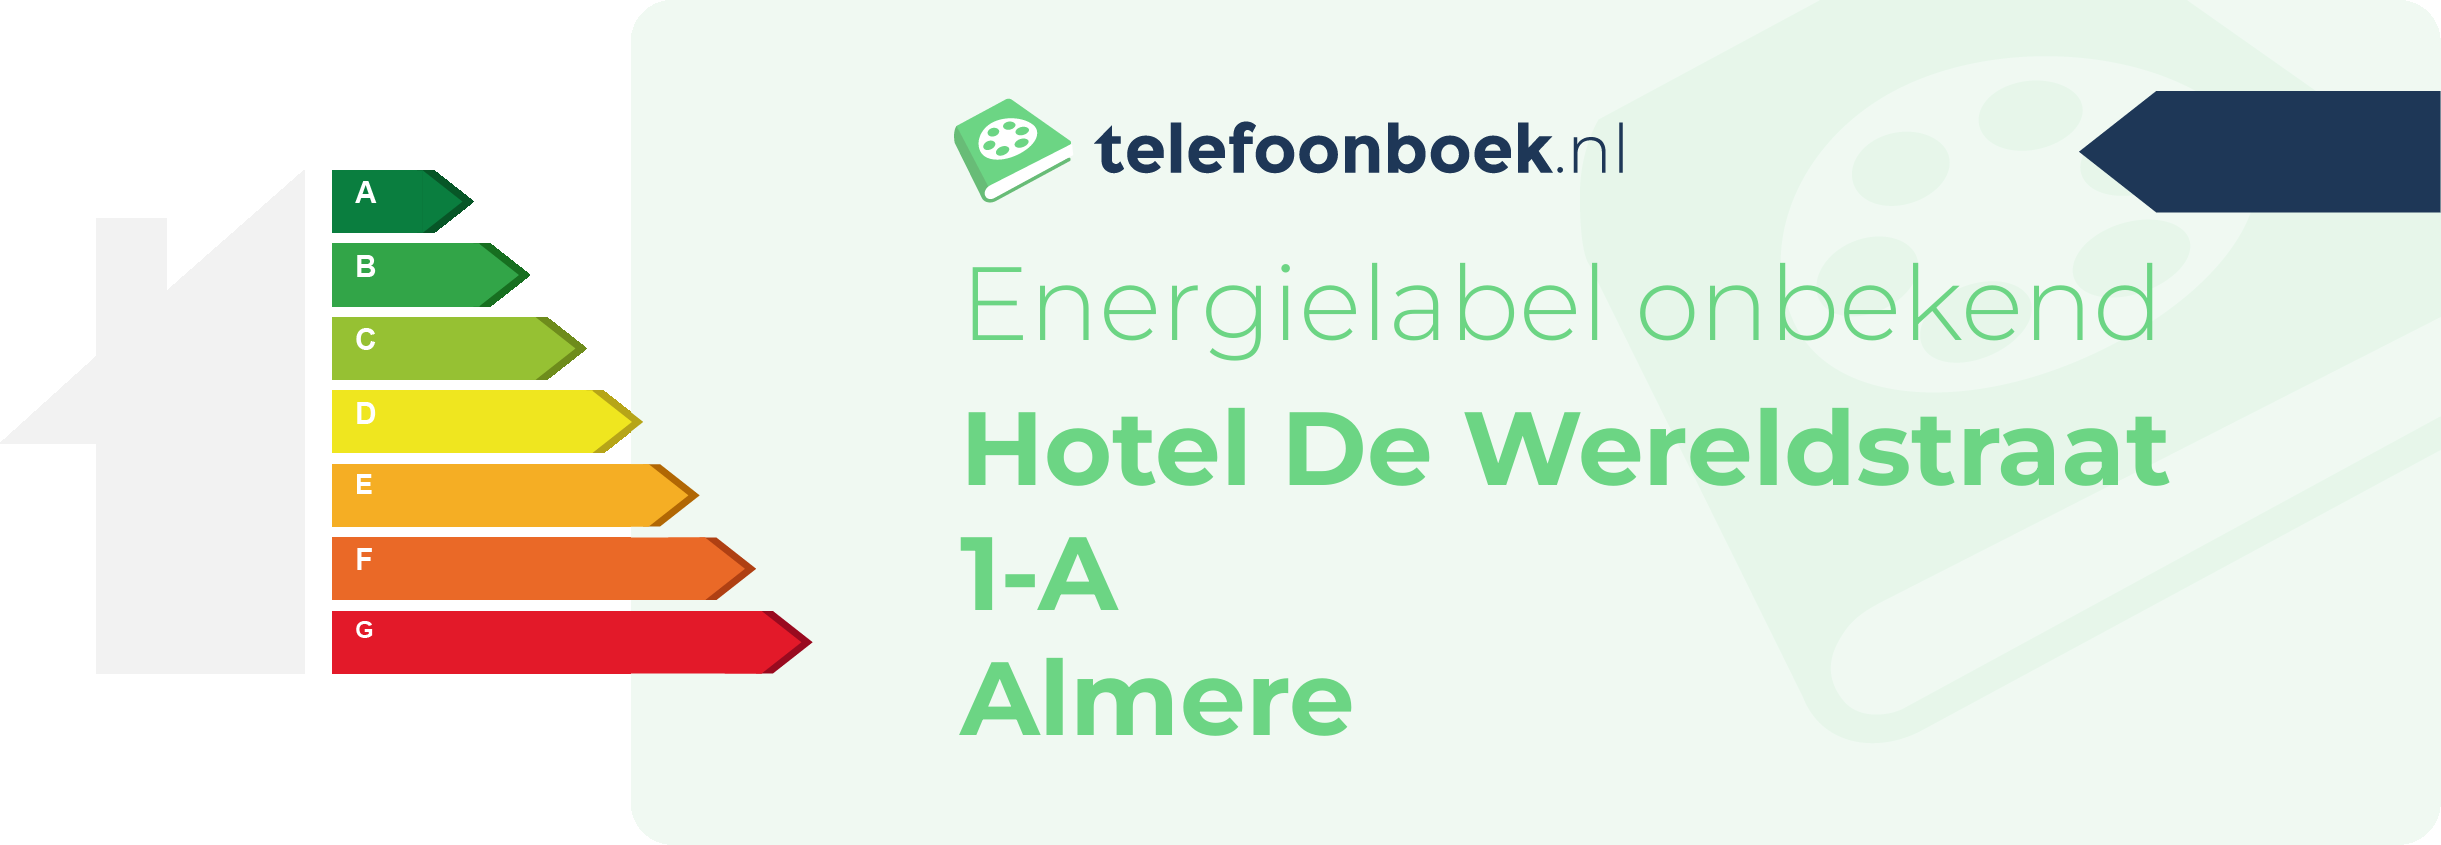 Energielabel Hotel De Wereldstraat 1-A Almere